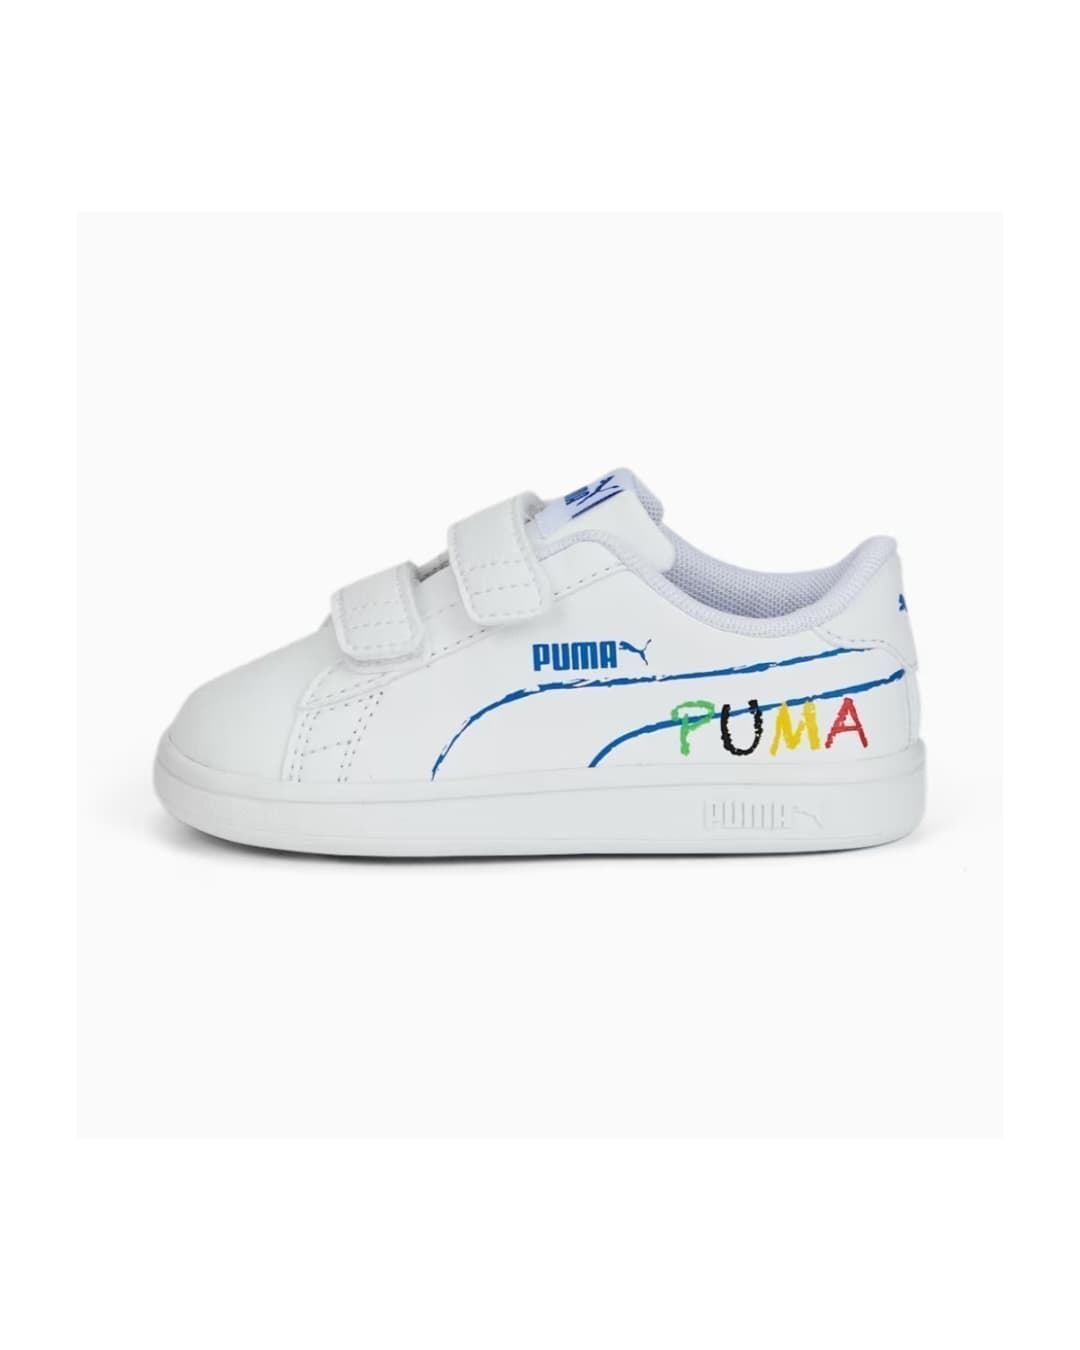 Puma Smash School White Sneakers for Kids - Image 1